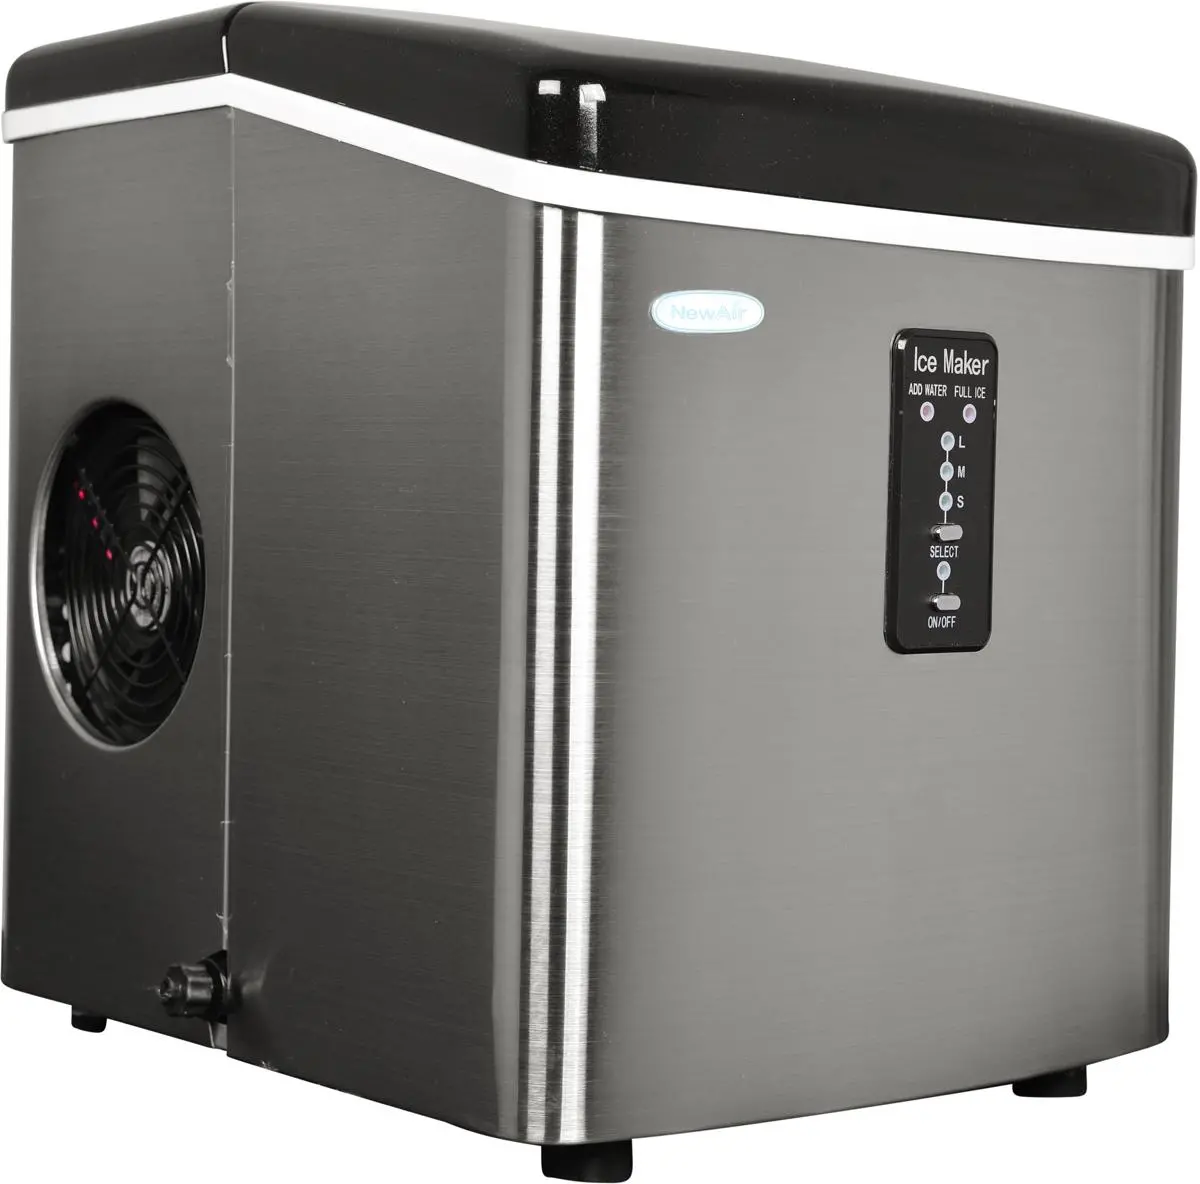 Photos - Freezer NewAir New Air Portable Ice Maker AI-100SS